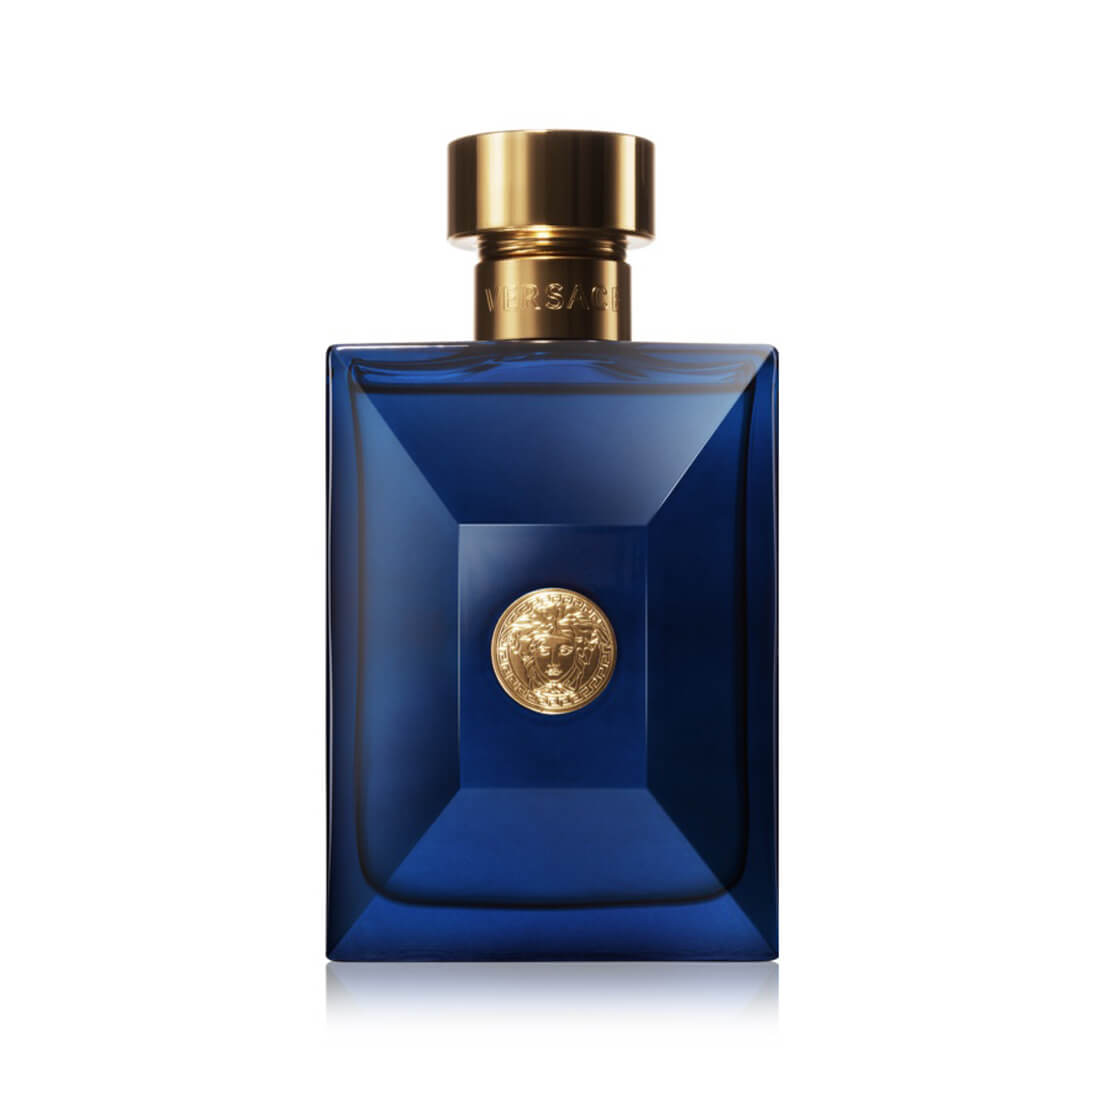 Versace Pour Homme Dylan Blue EDT Perfume For Men